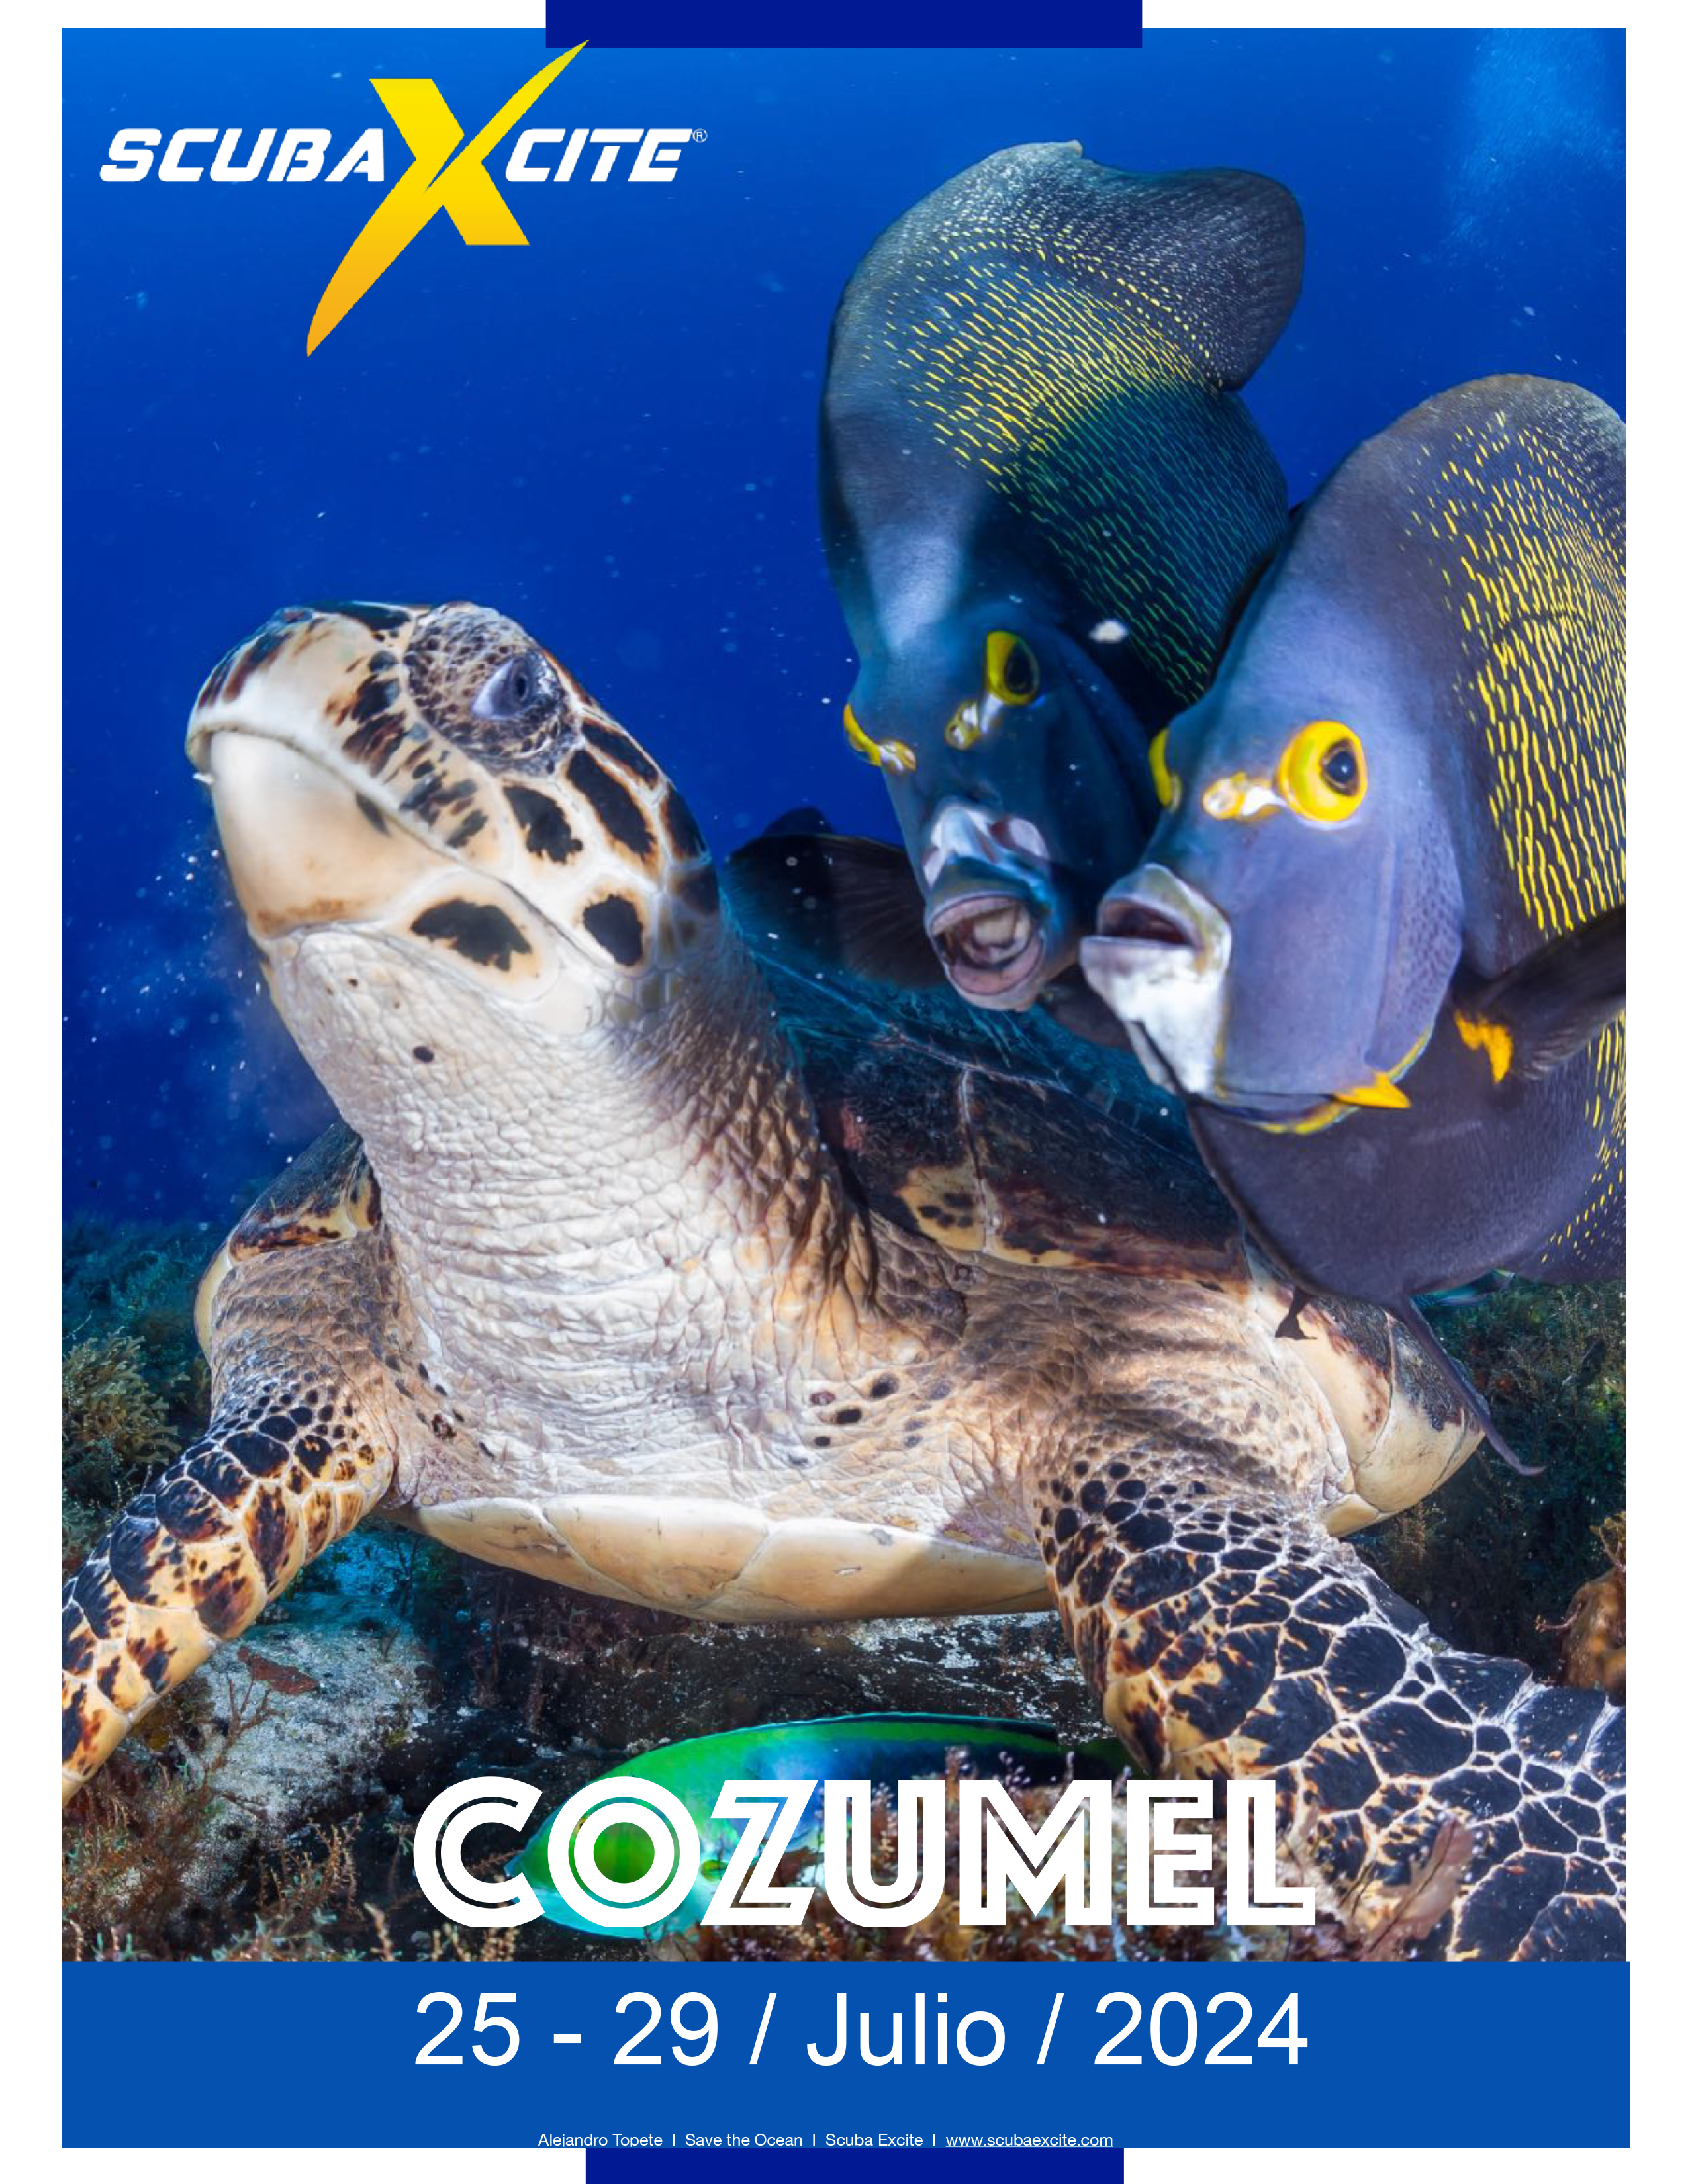 Buceo en Cozumel,Bucea Cozumel, Buceo en arrecifes de México,